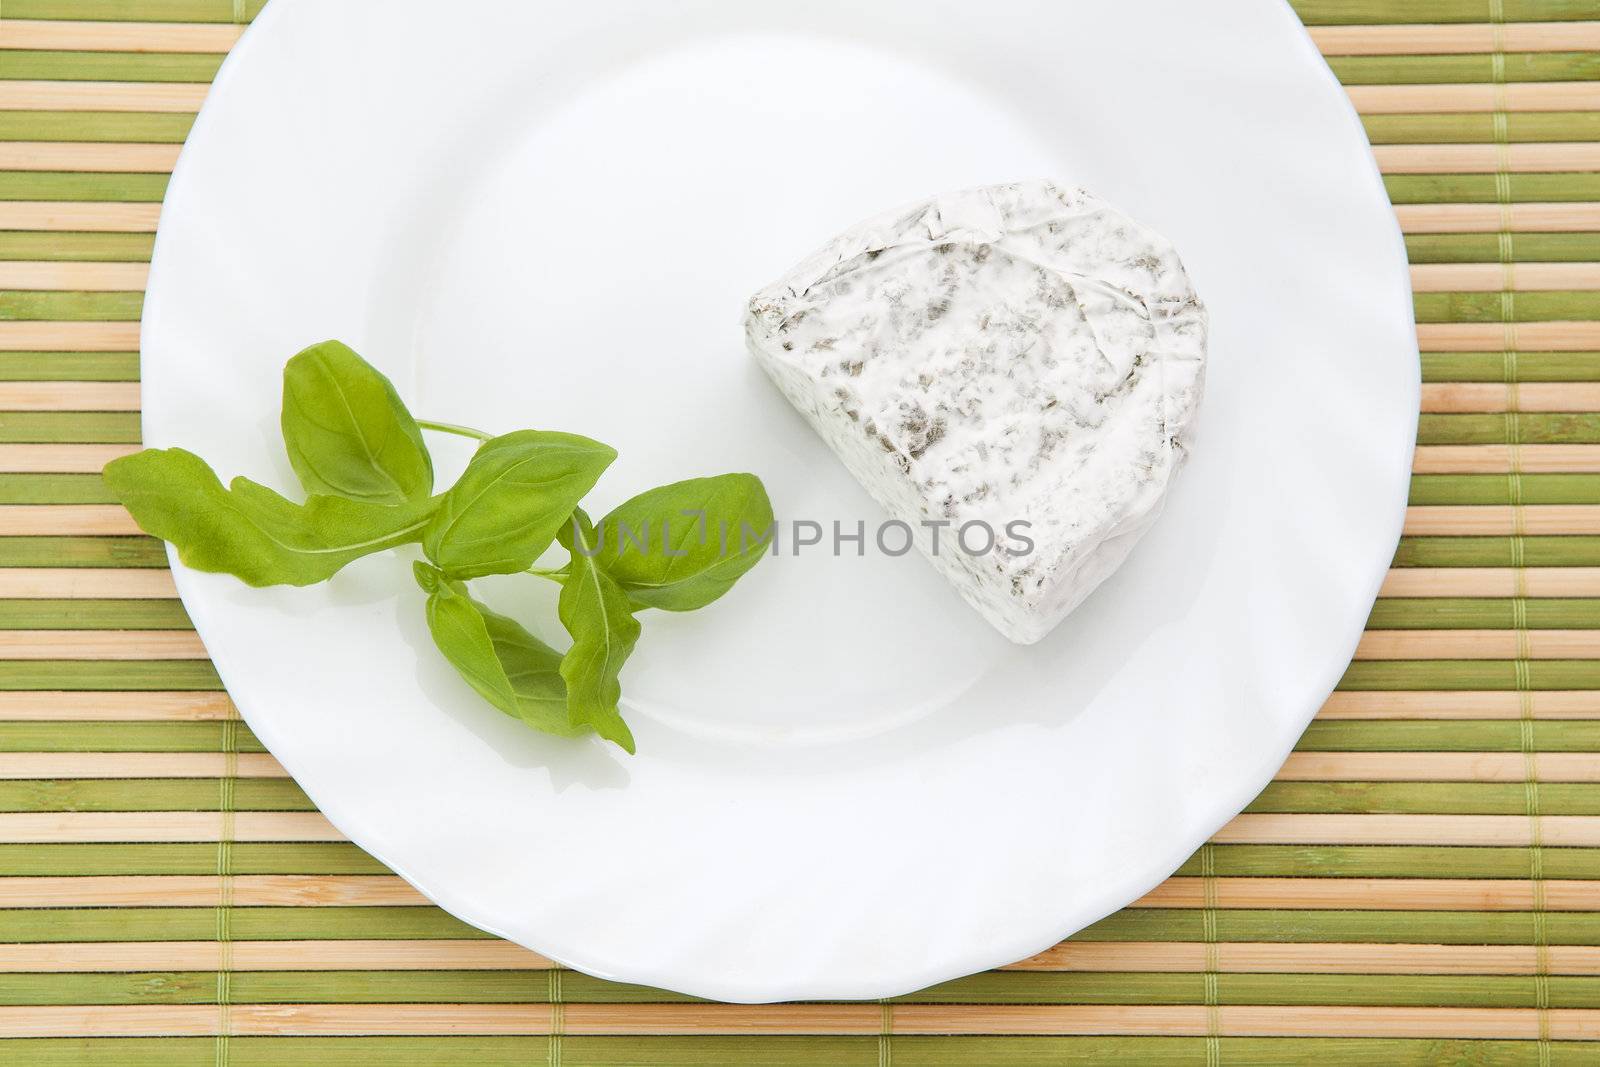 Blue cheese by Yaurinko